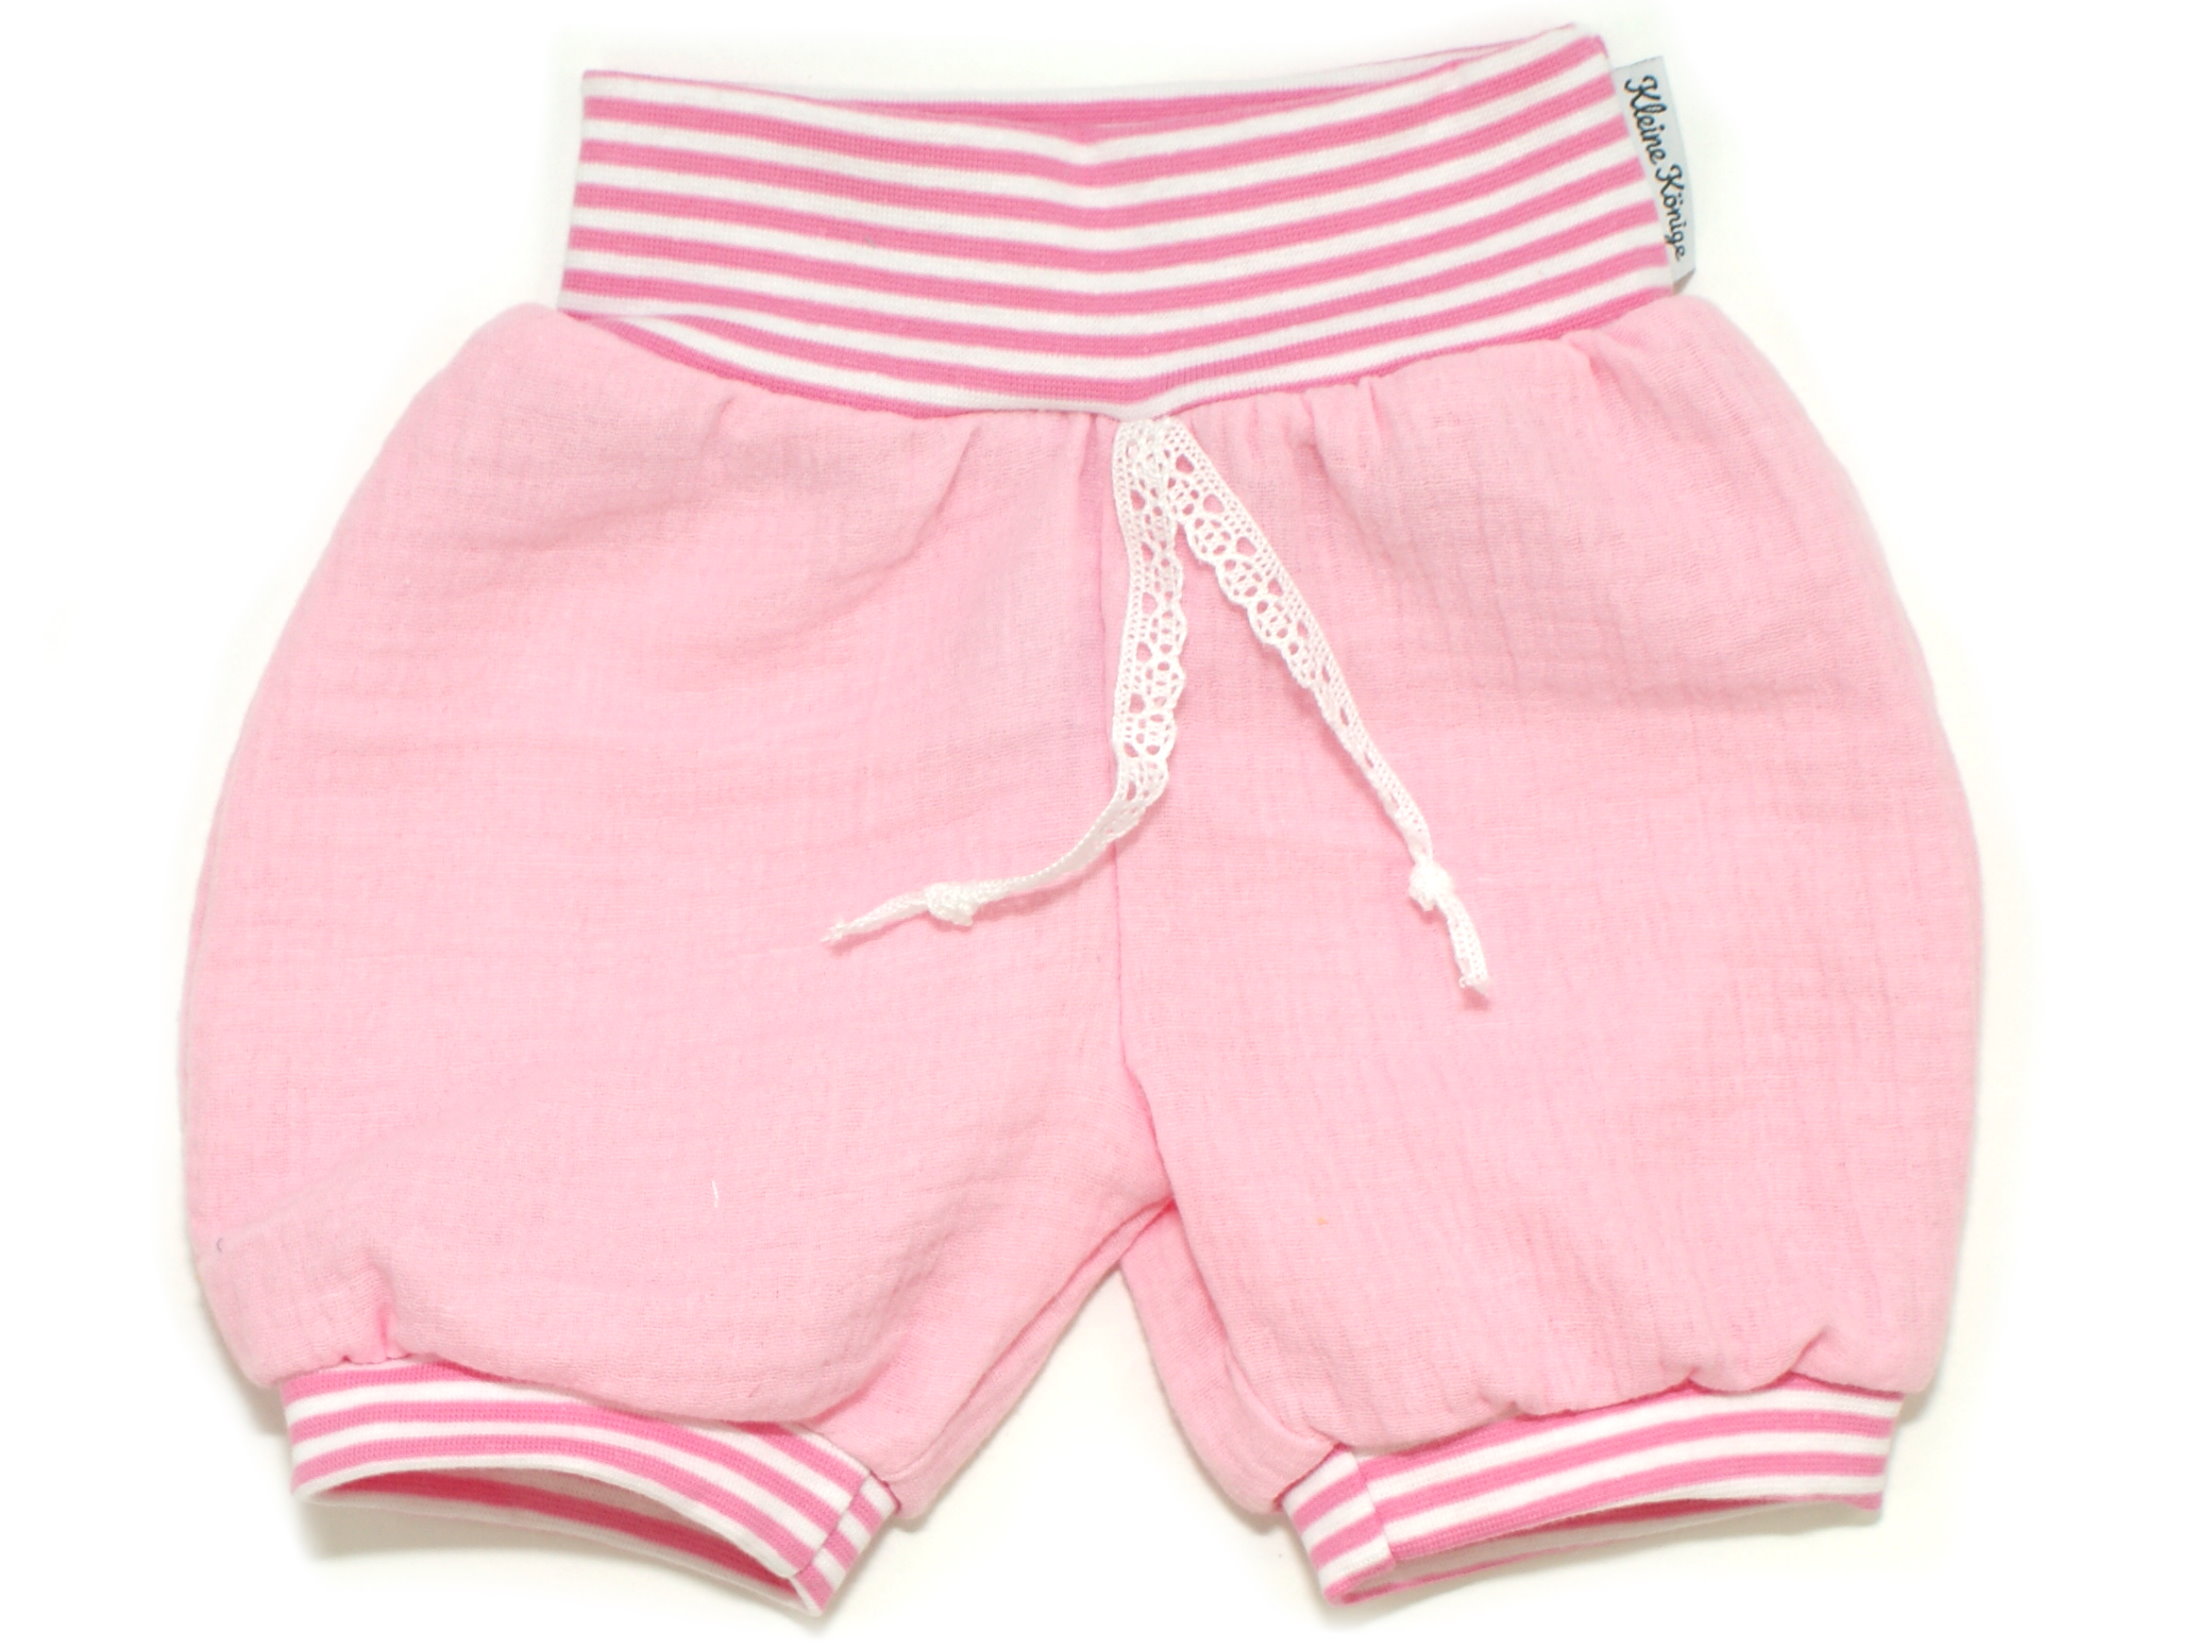 Musselin Kinder Shorts "Uni Rosa" rosa weiß in 74/80